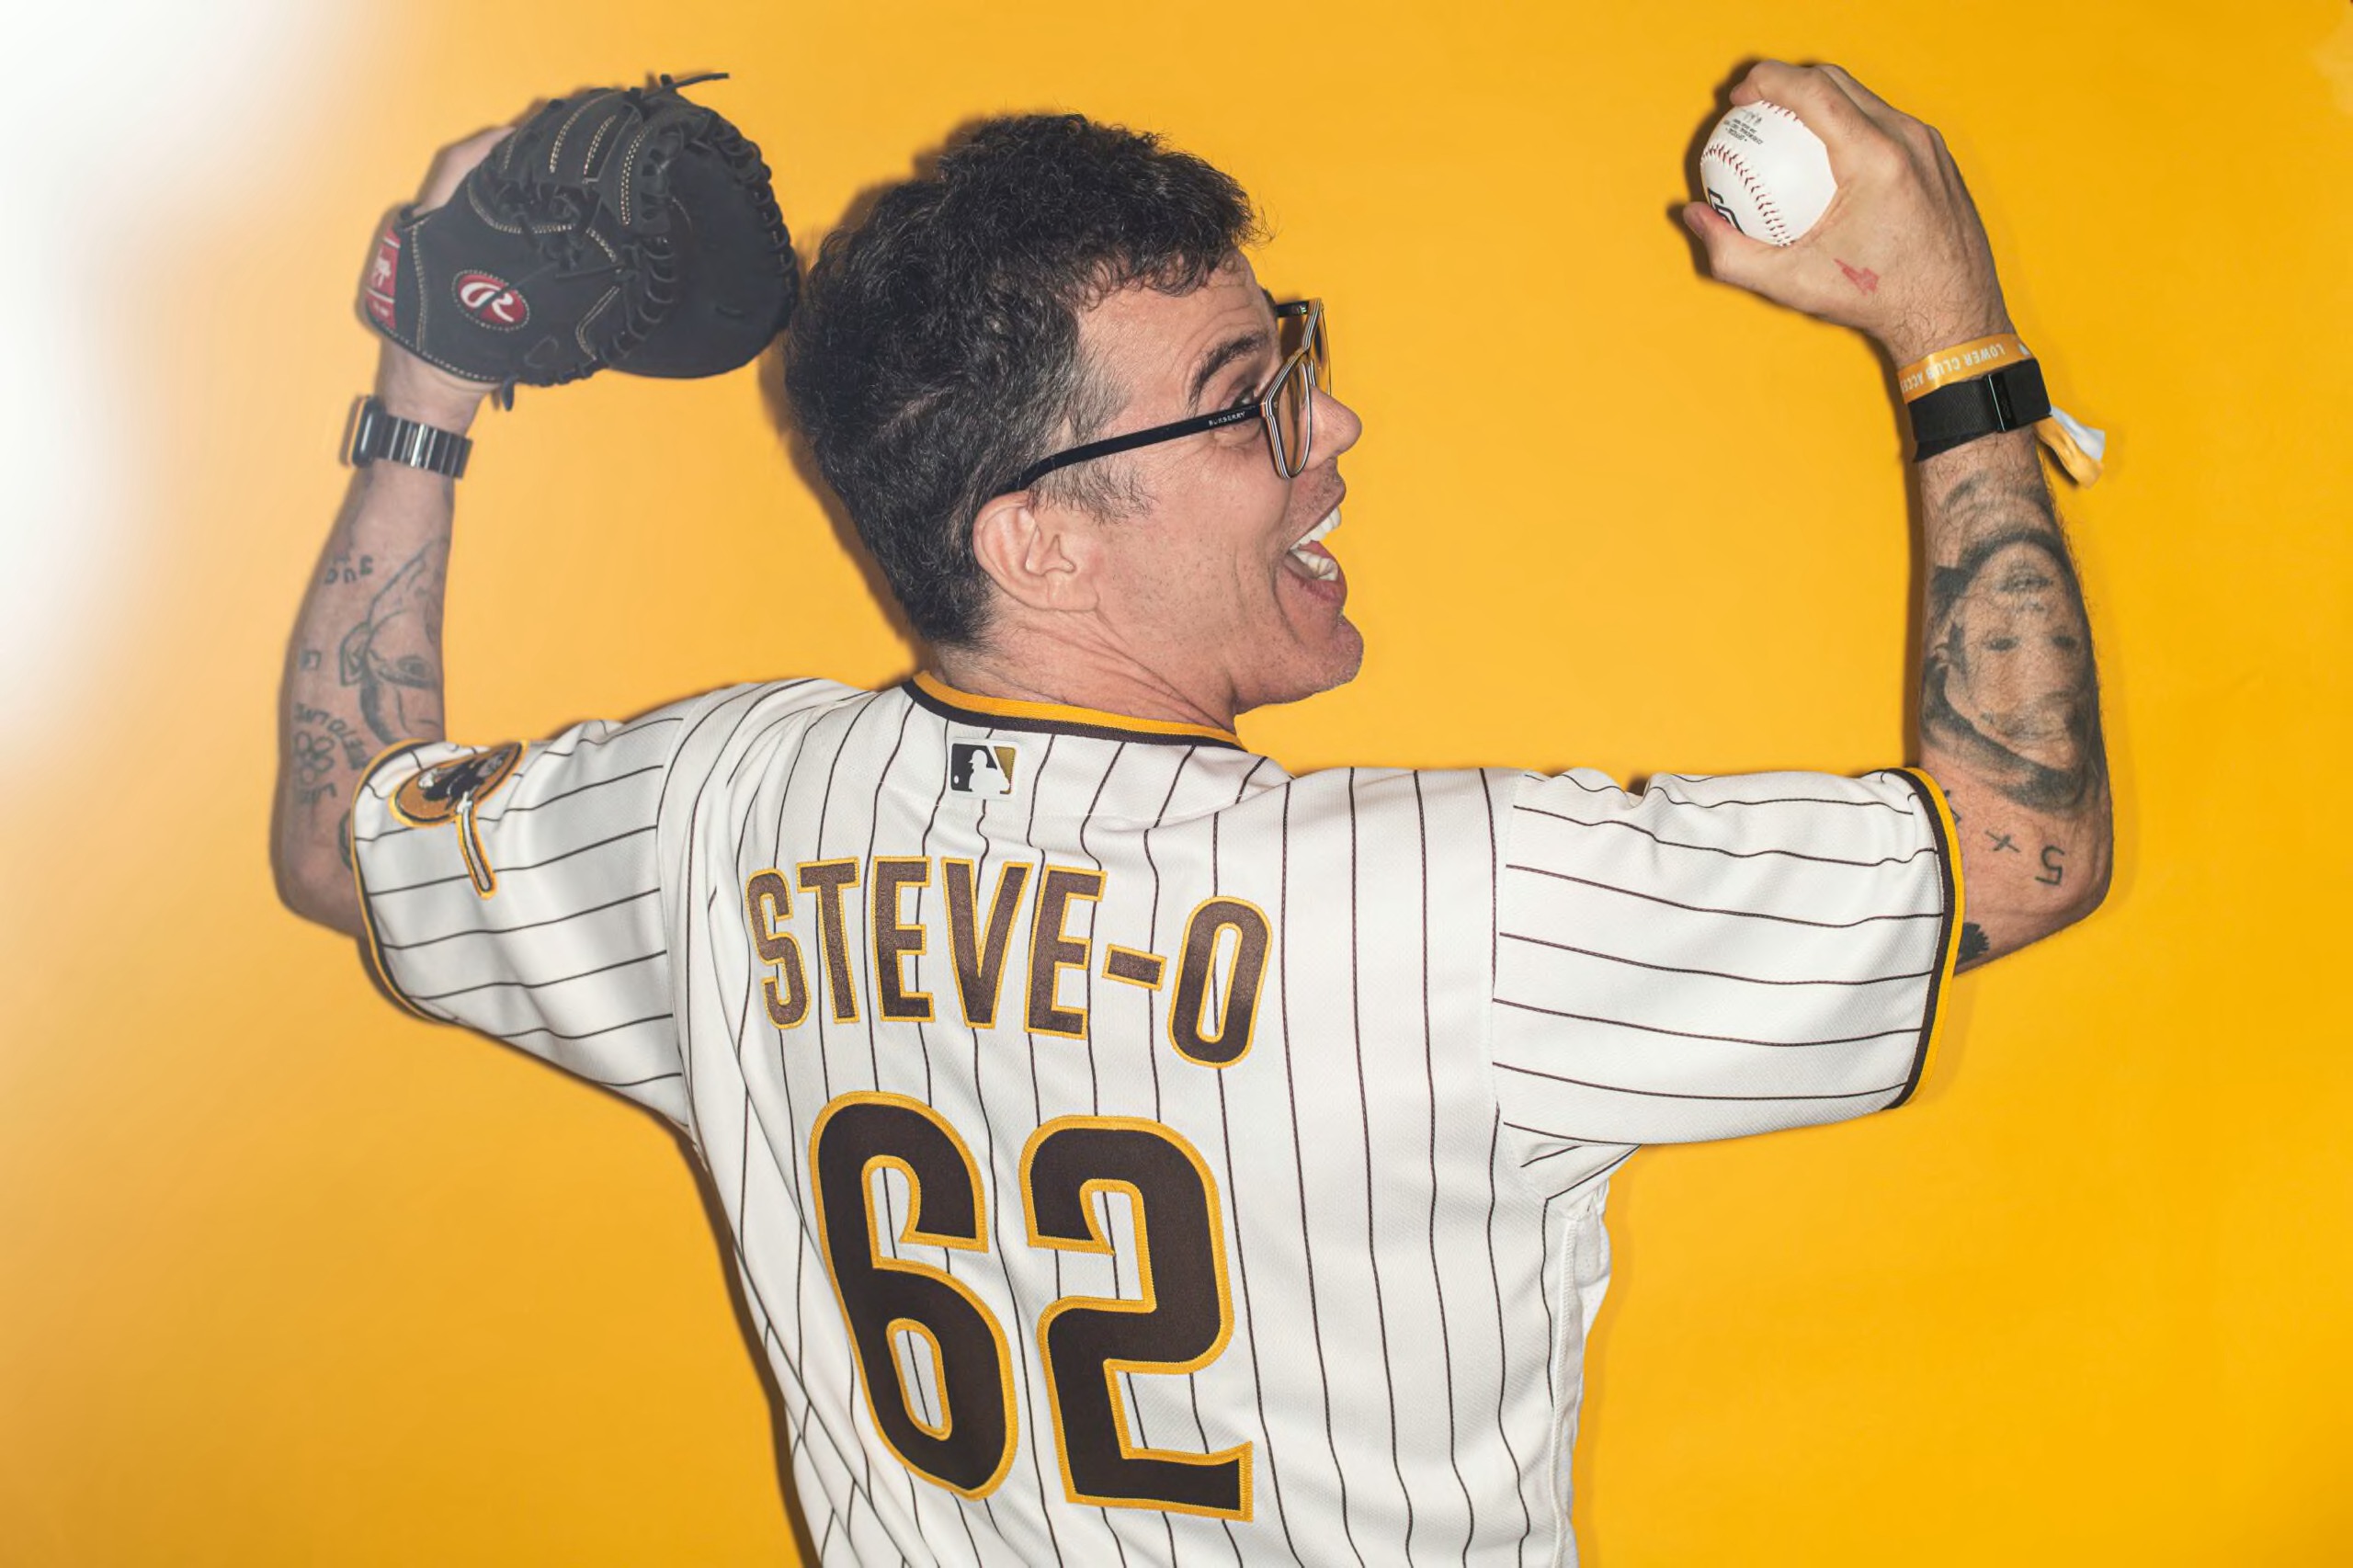 Steve-O, San Diego Padres